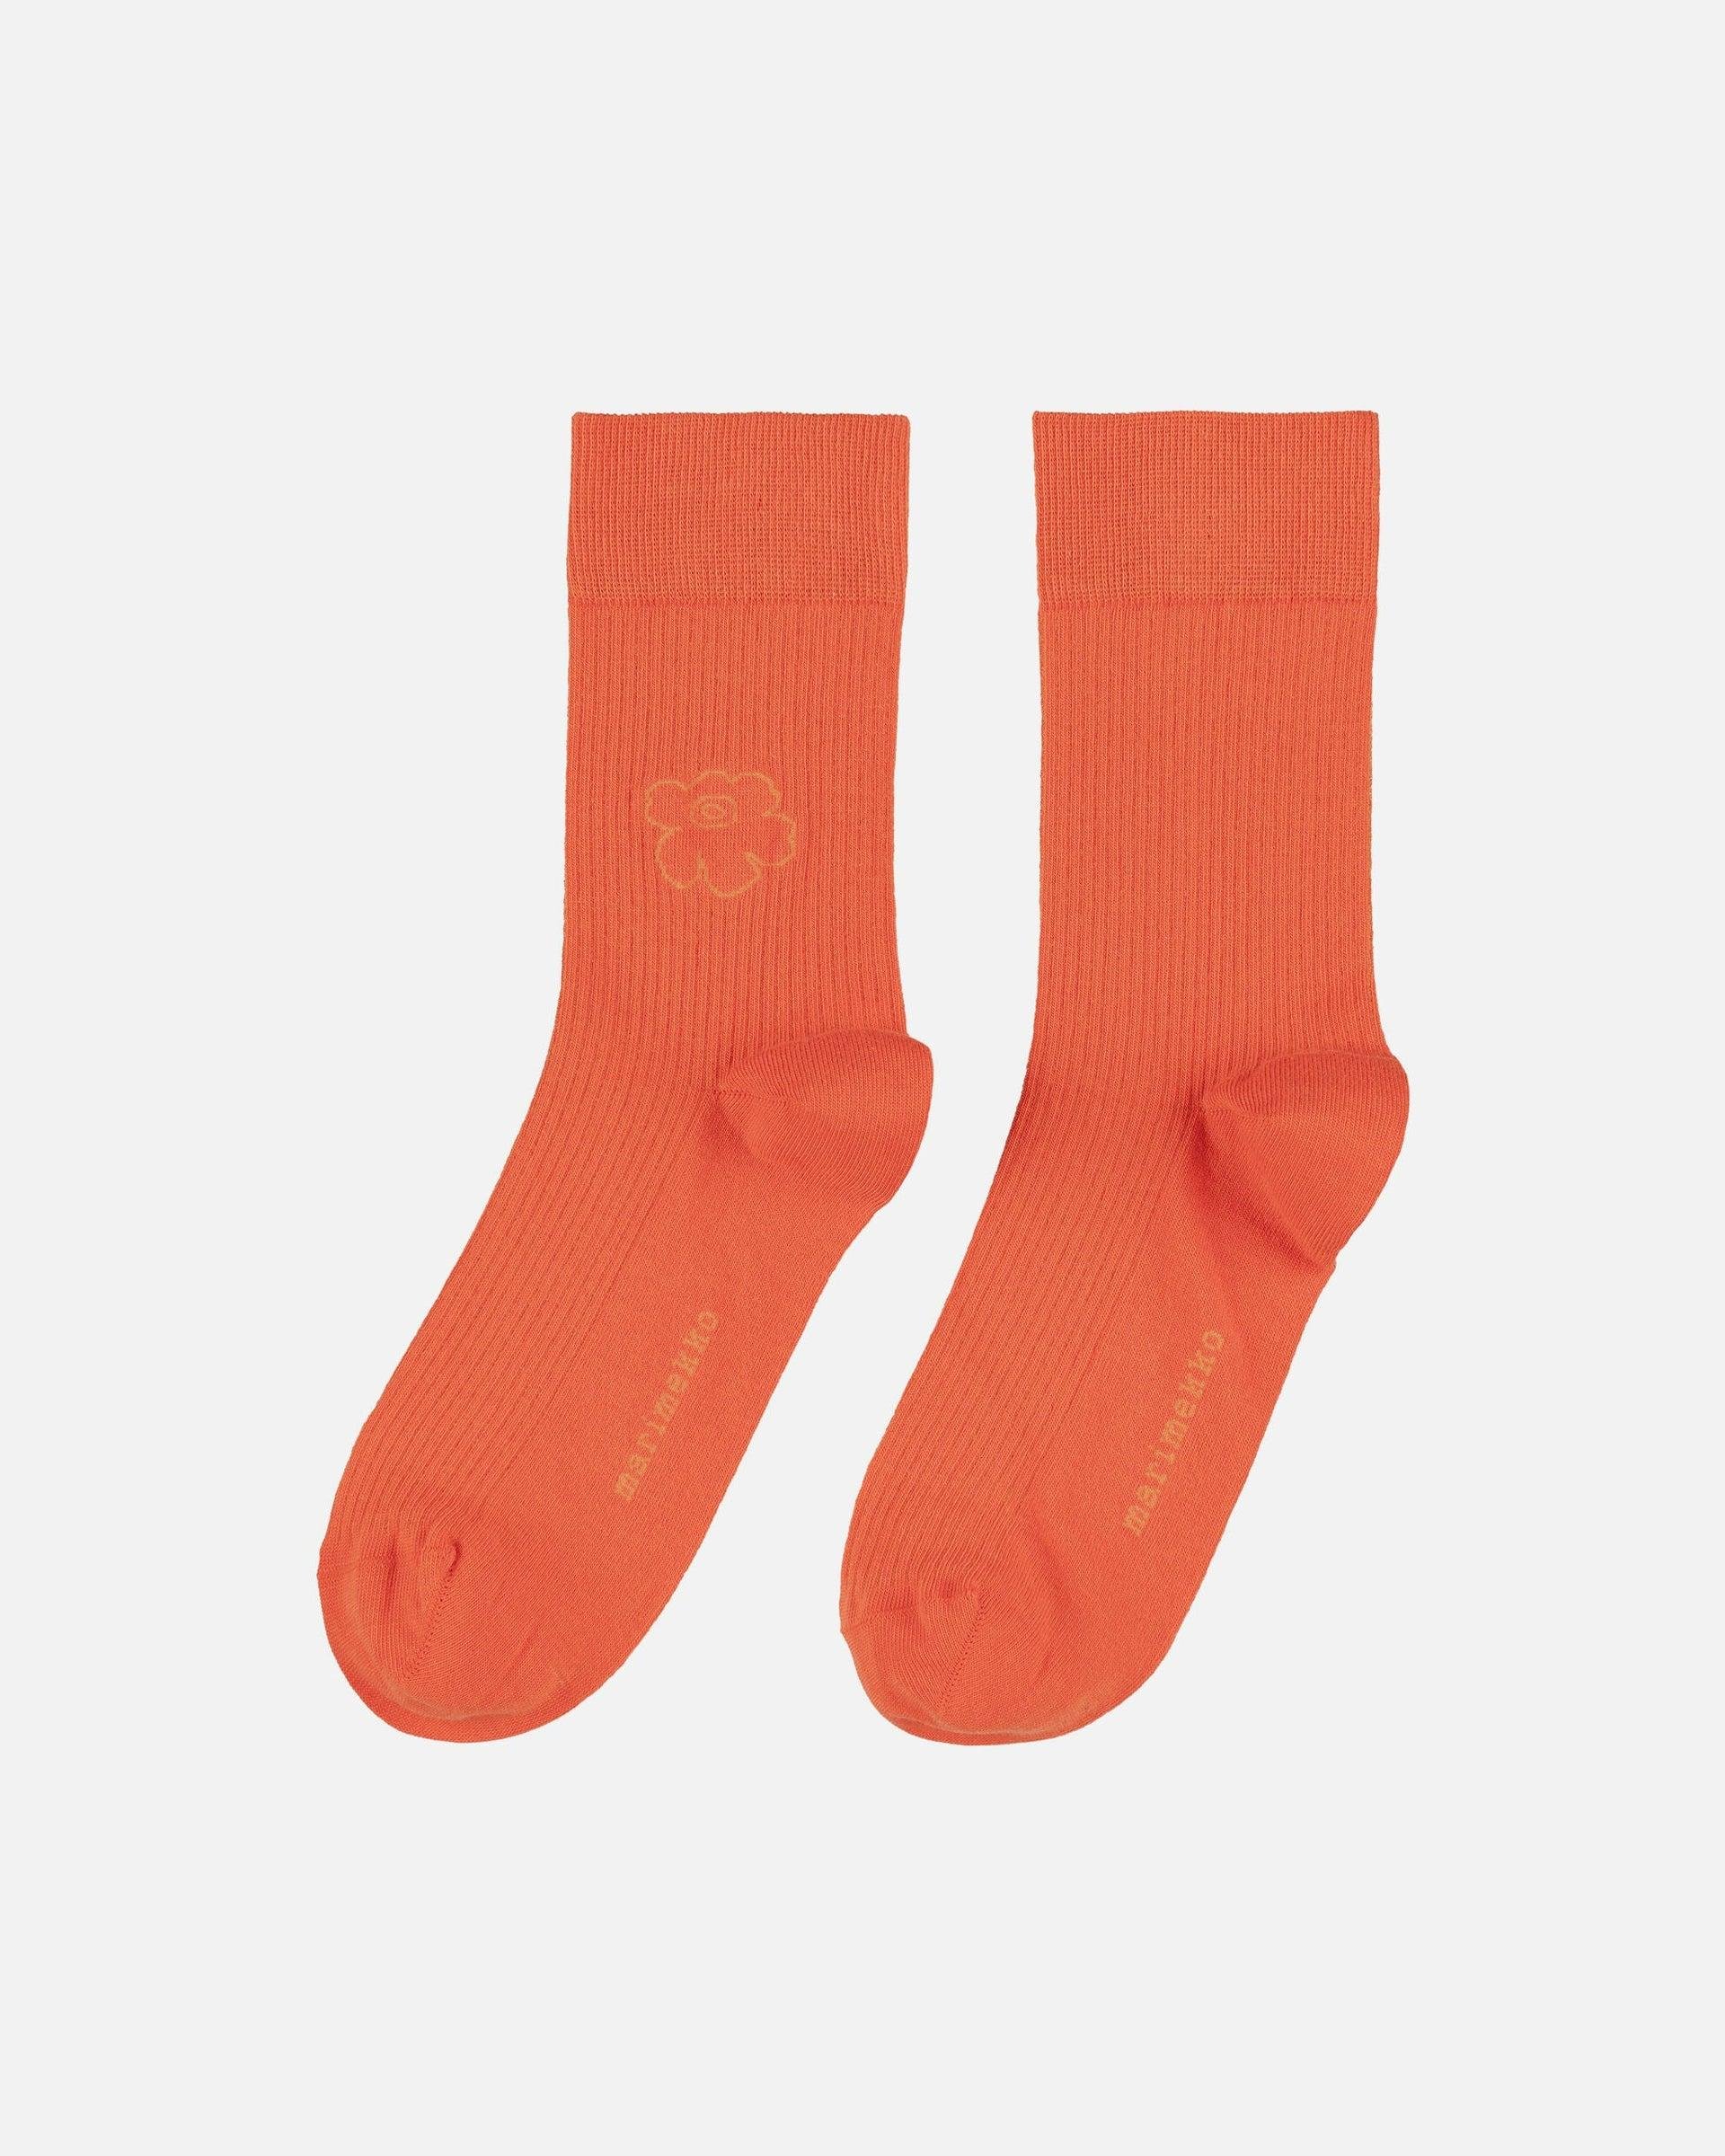 Taipuisa Unikko Socks by MARIMEKKO